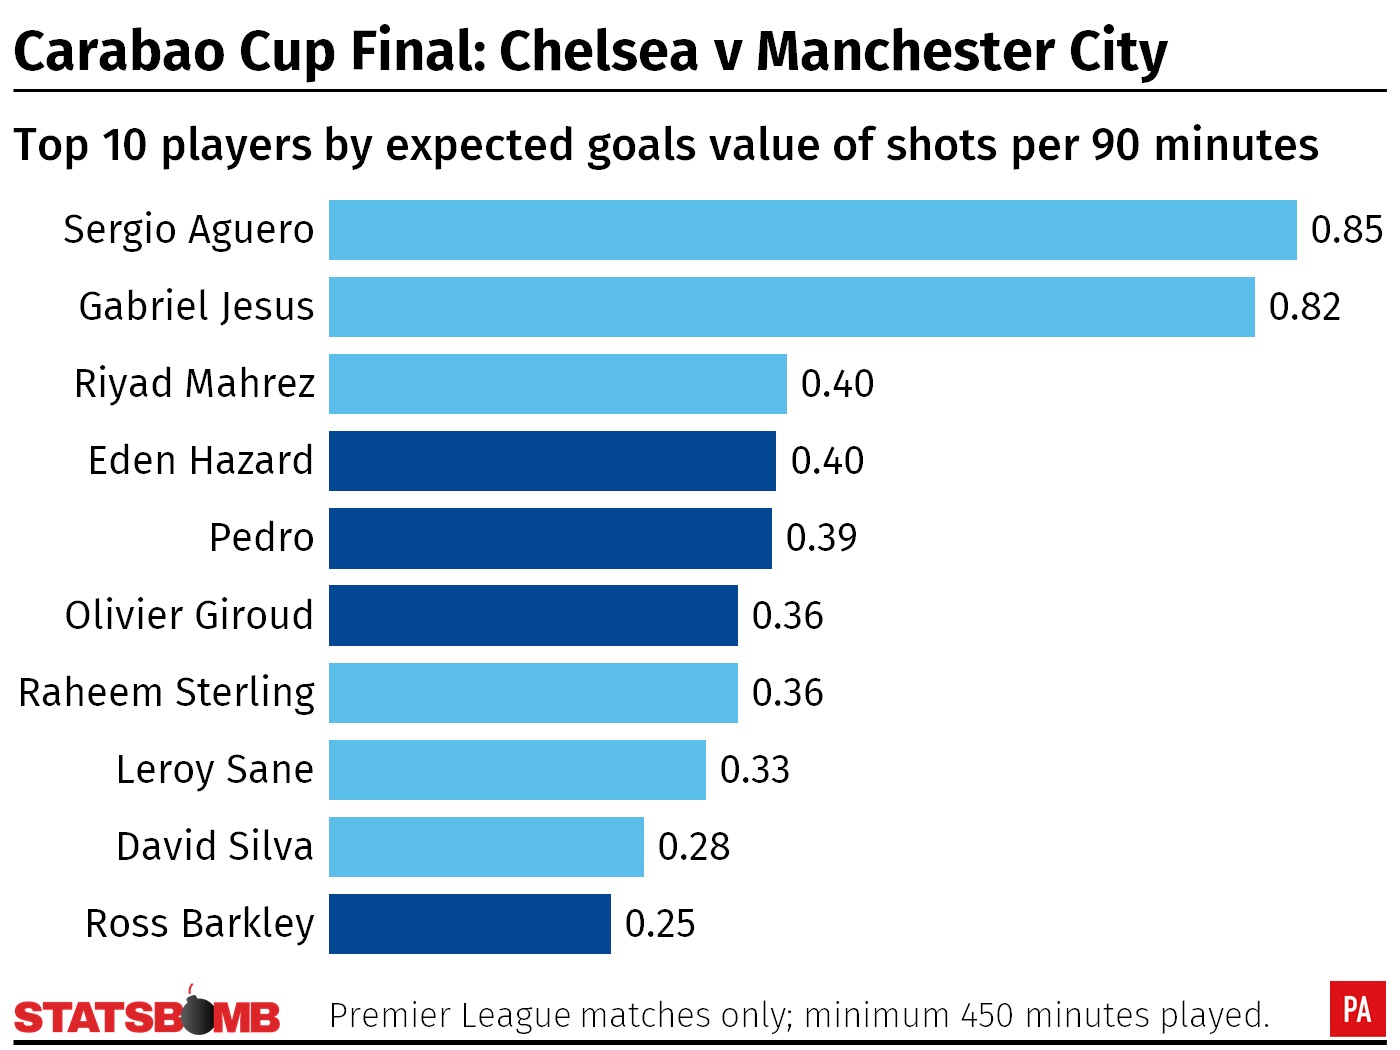 Chelsea v Manchester City: xG per 90